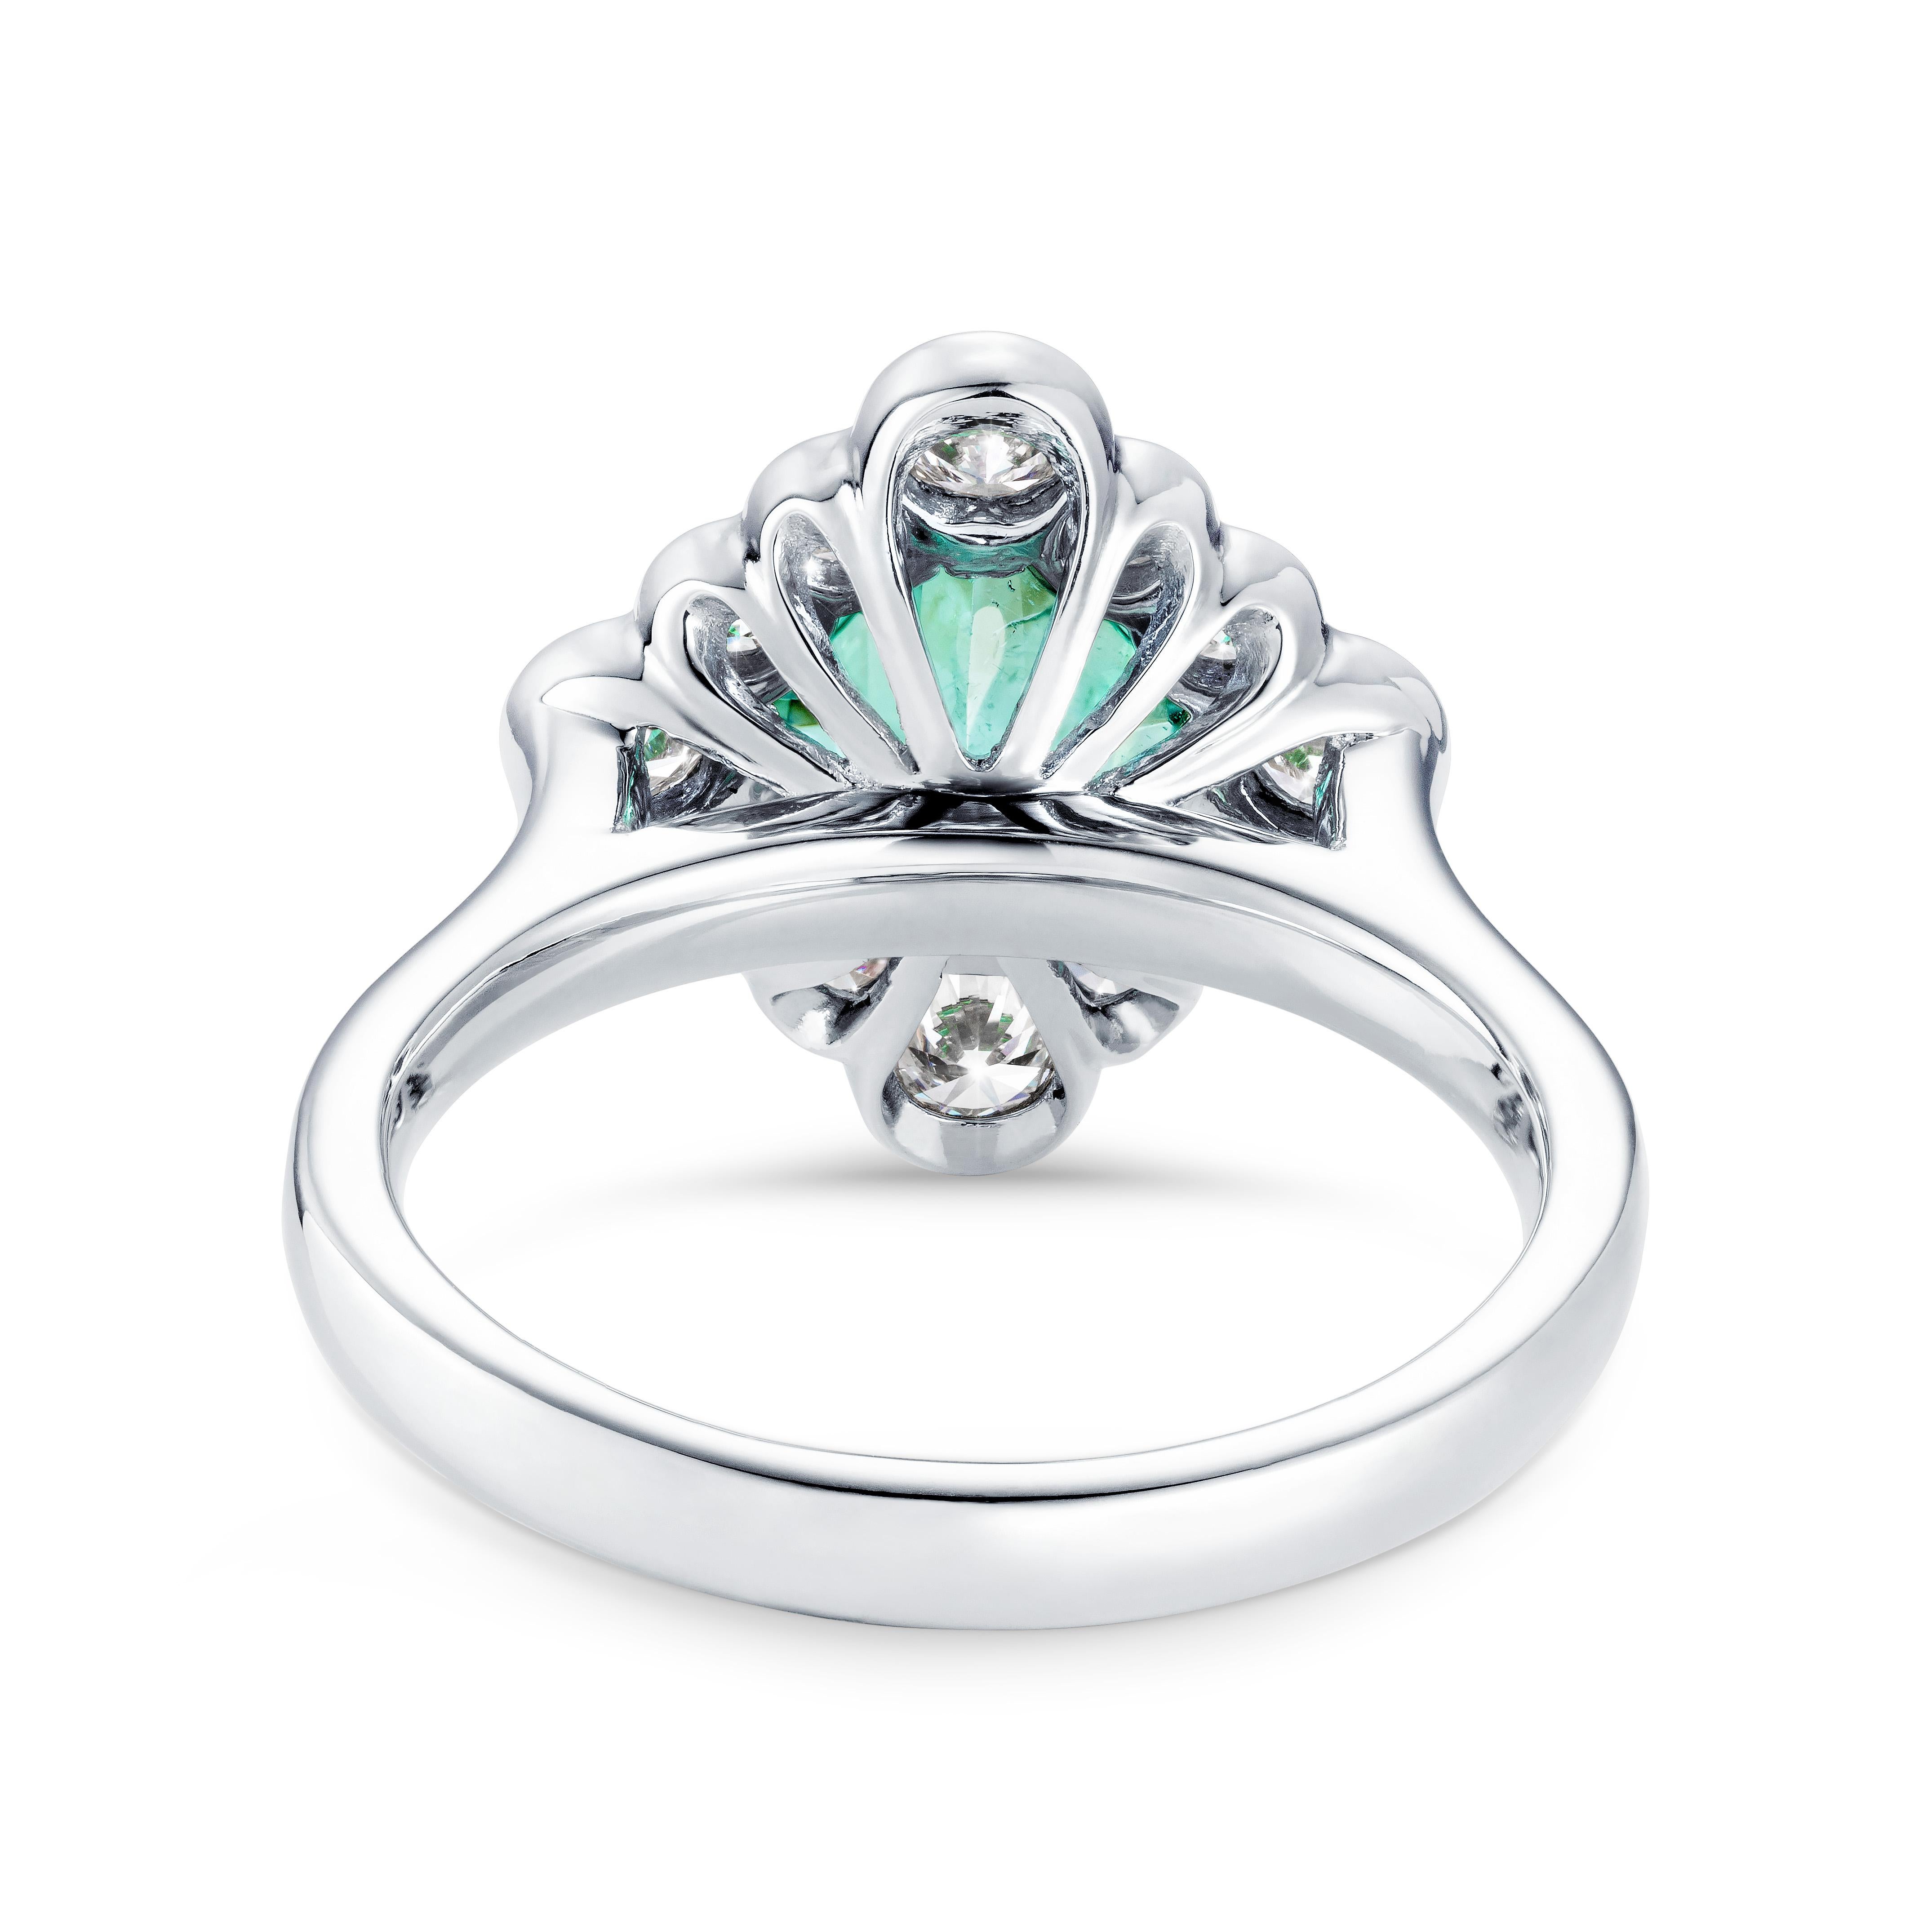 Contemporary Marcel Salloum 1.05 Carat Paraiba Tourmaline Diamond Engagement Ring in Platinum For Sale